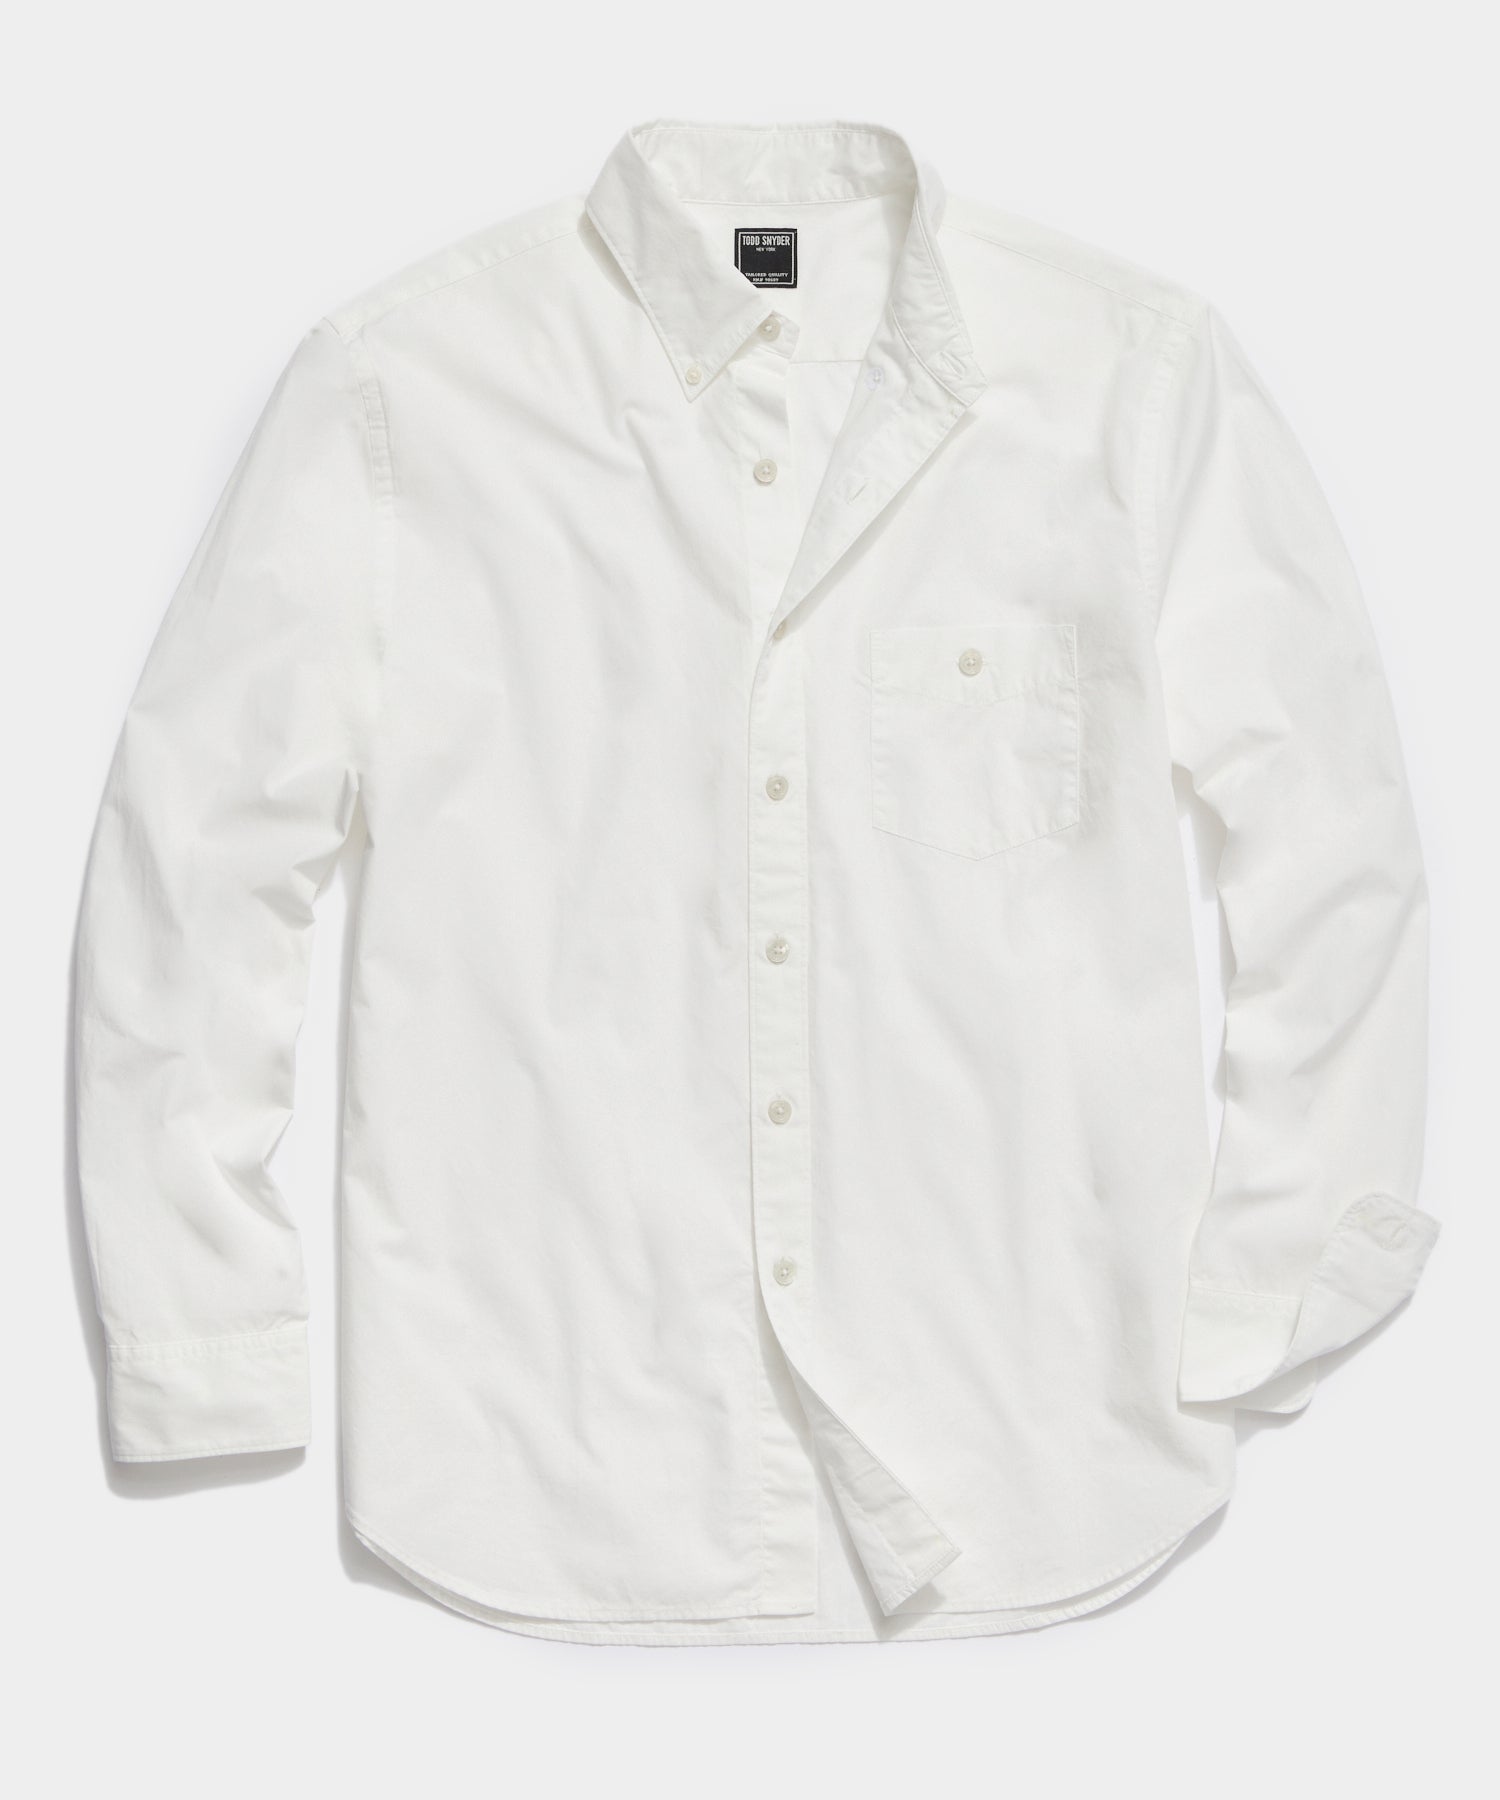 Classic Fit Favorite Poplin Shirt in White